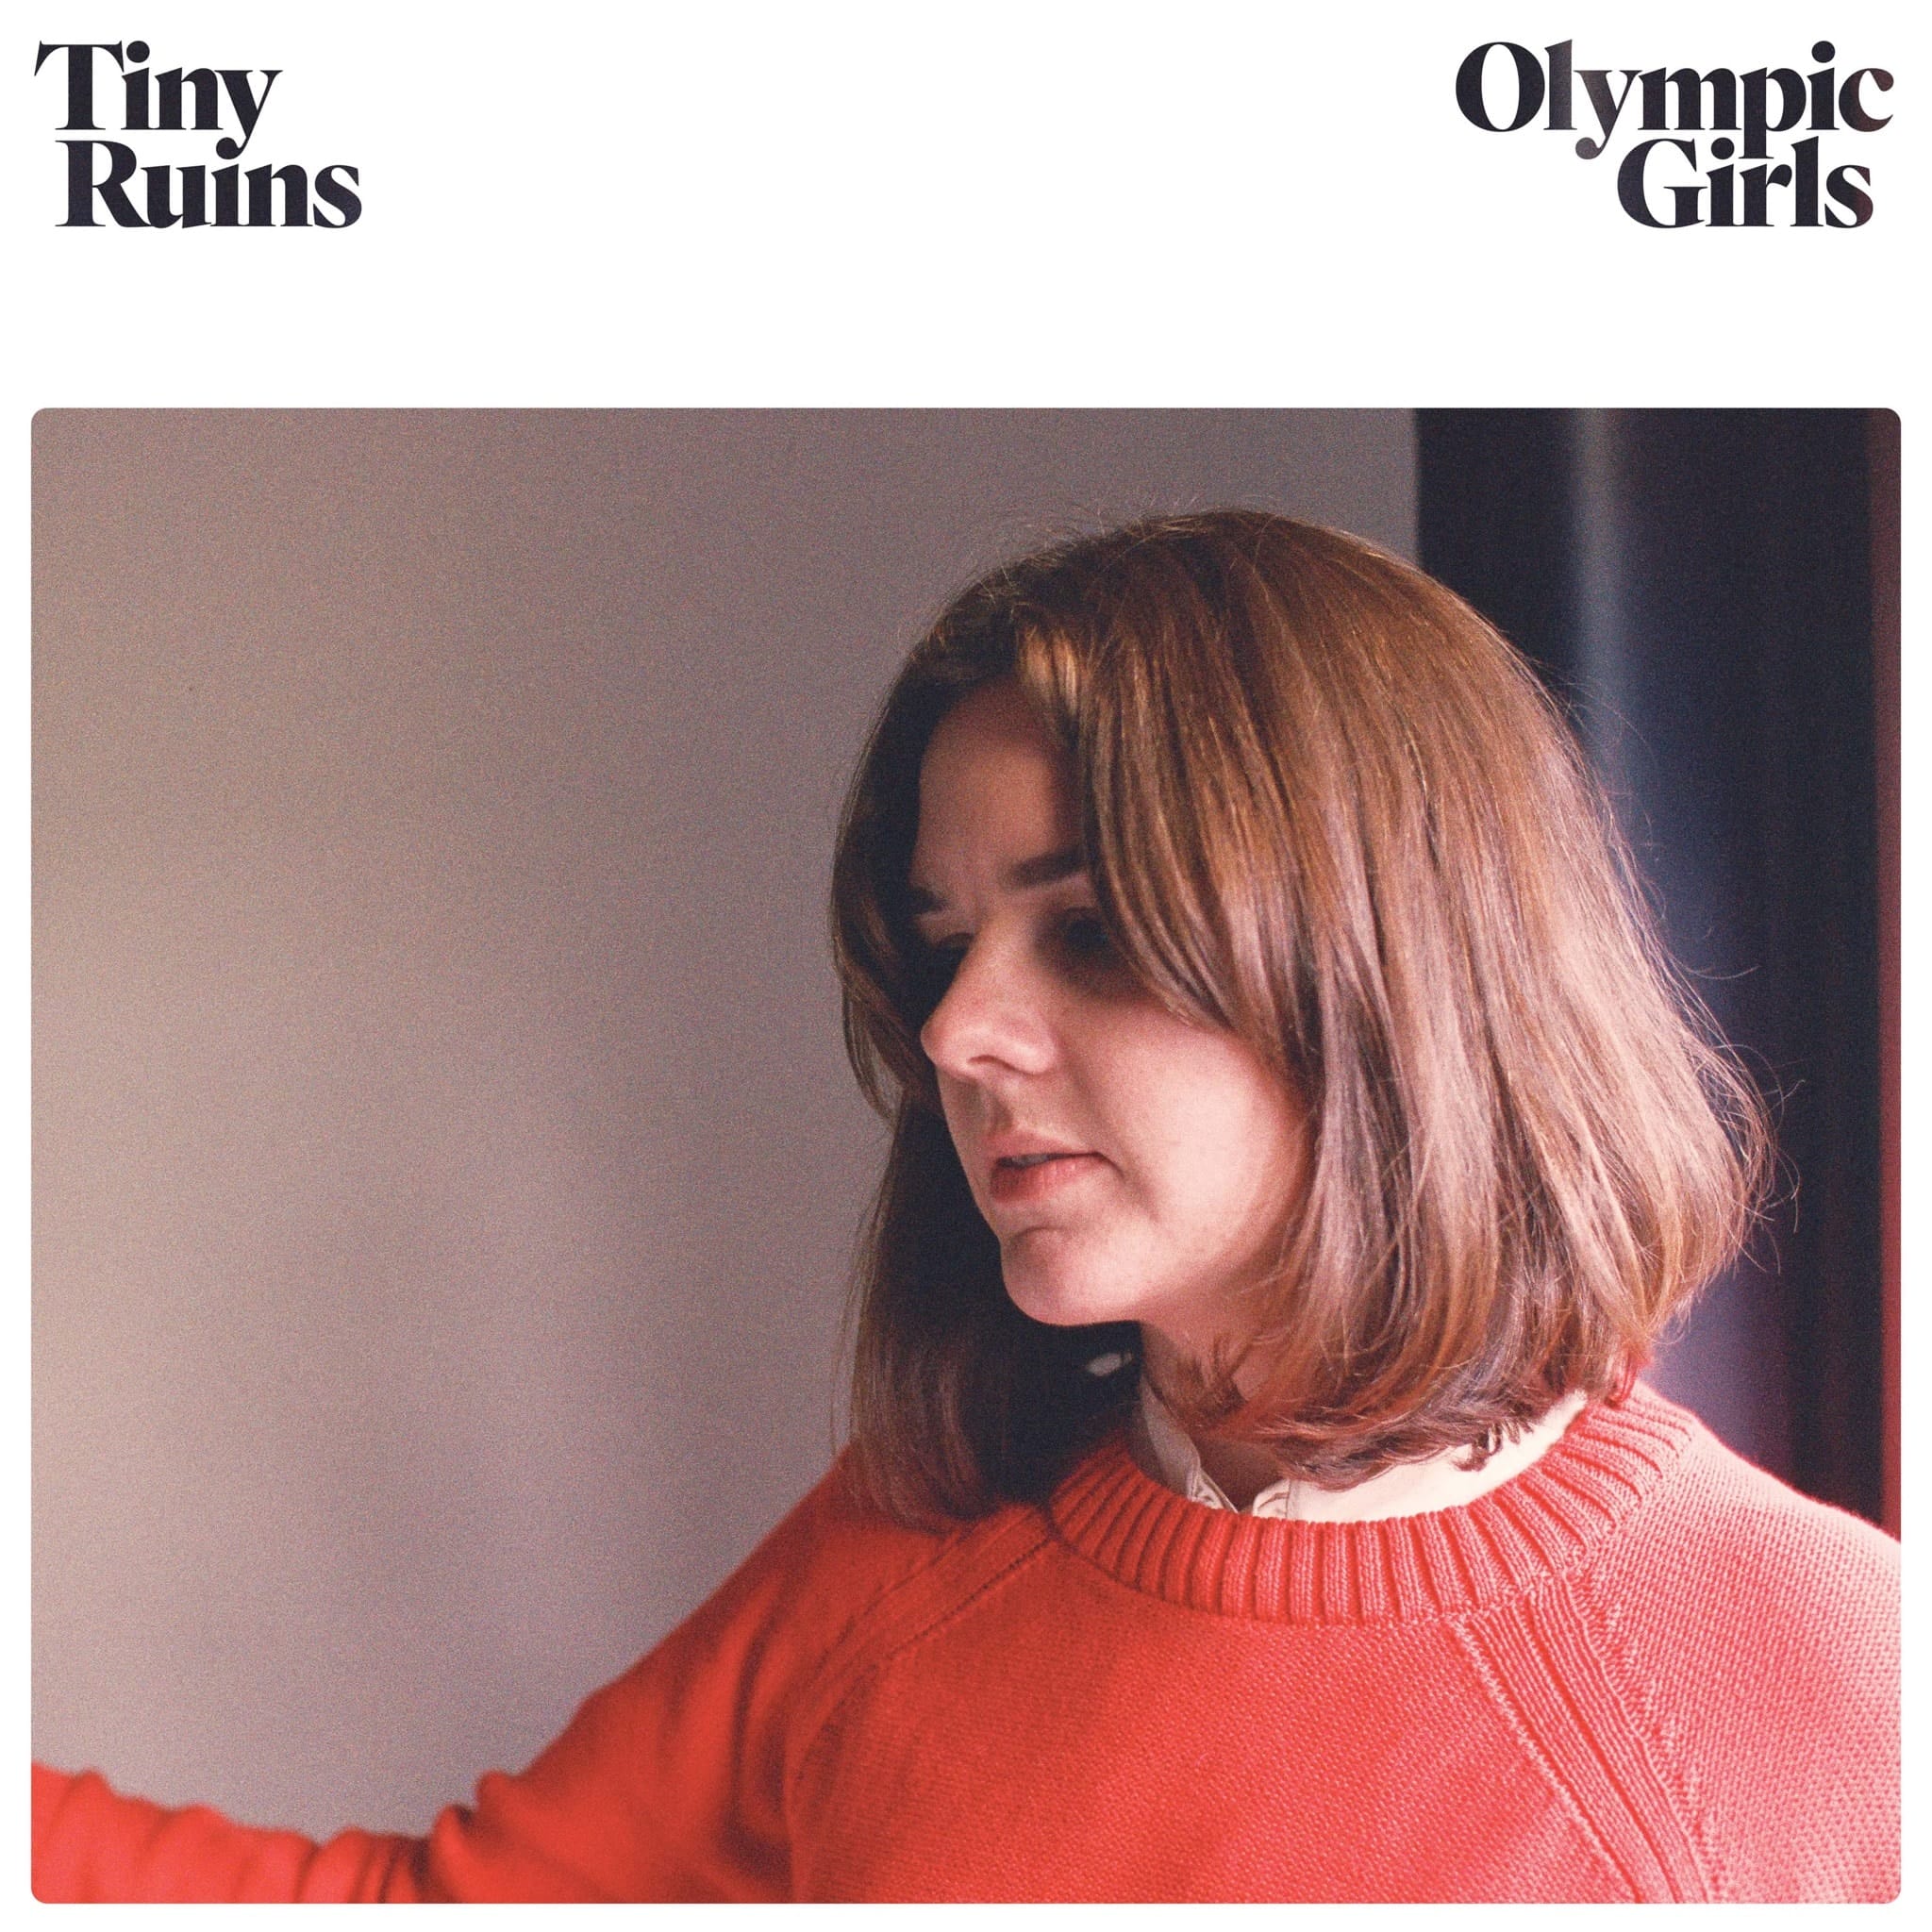 Tiny Ruins image pochette album Olympic Girls musique